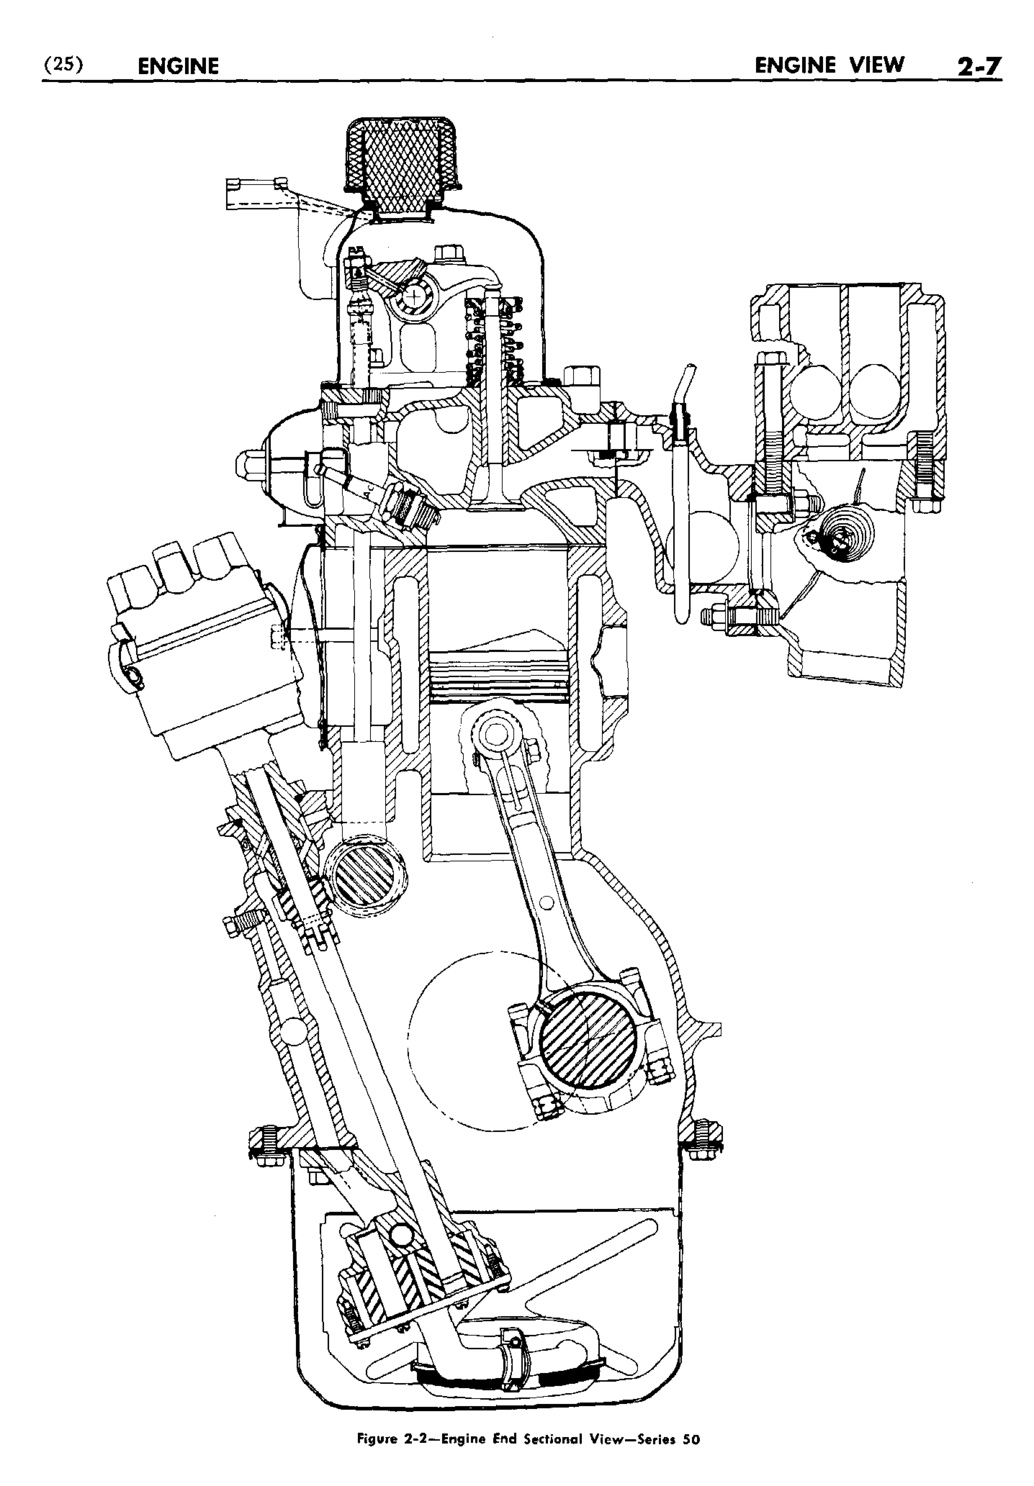 n_03 1950 Buick Shop Manual - Engine-007-007.jpg